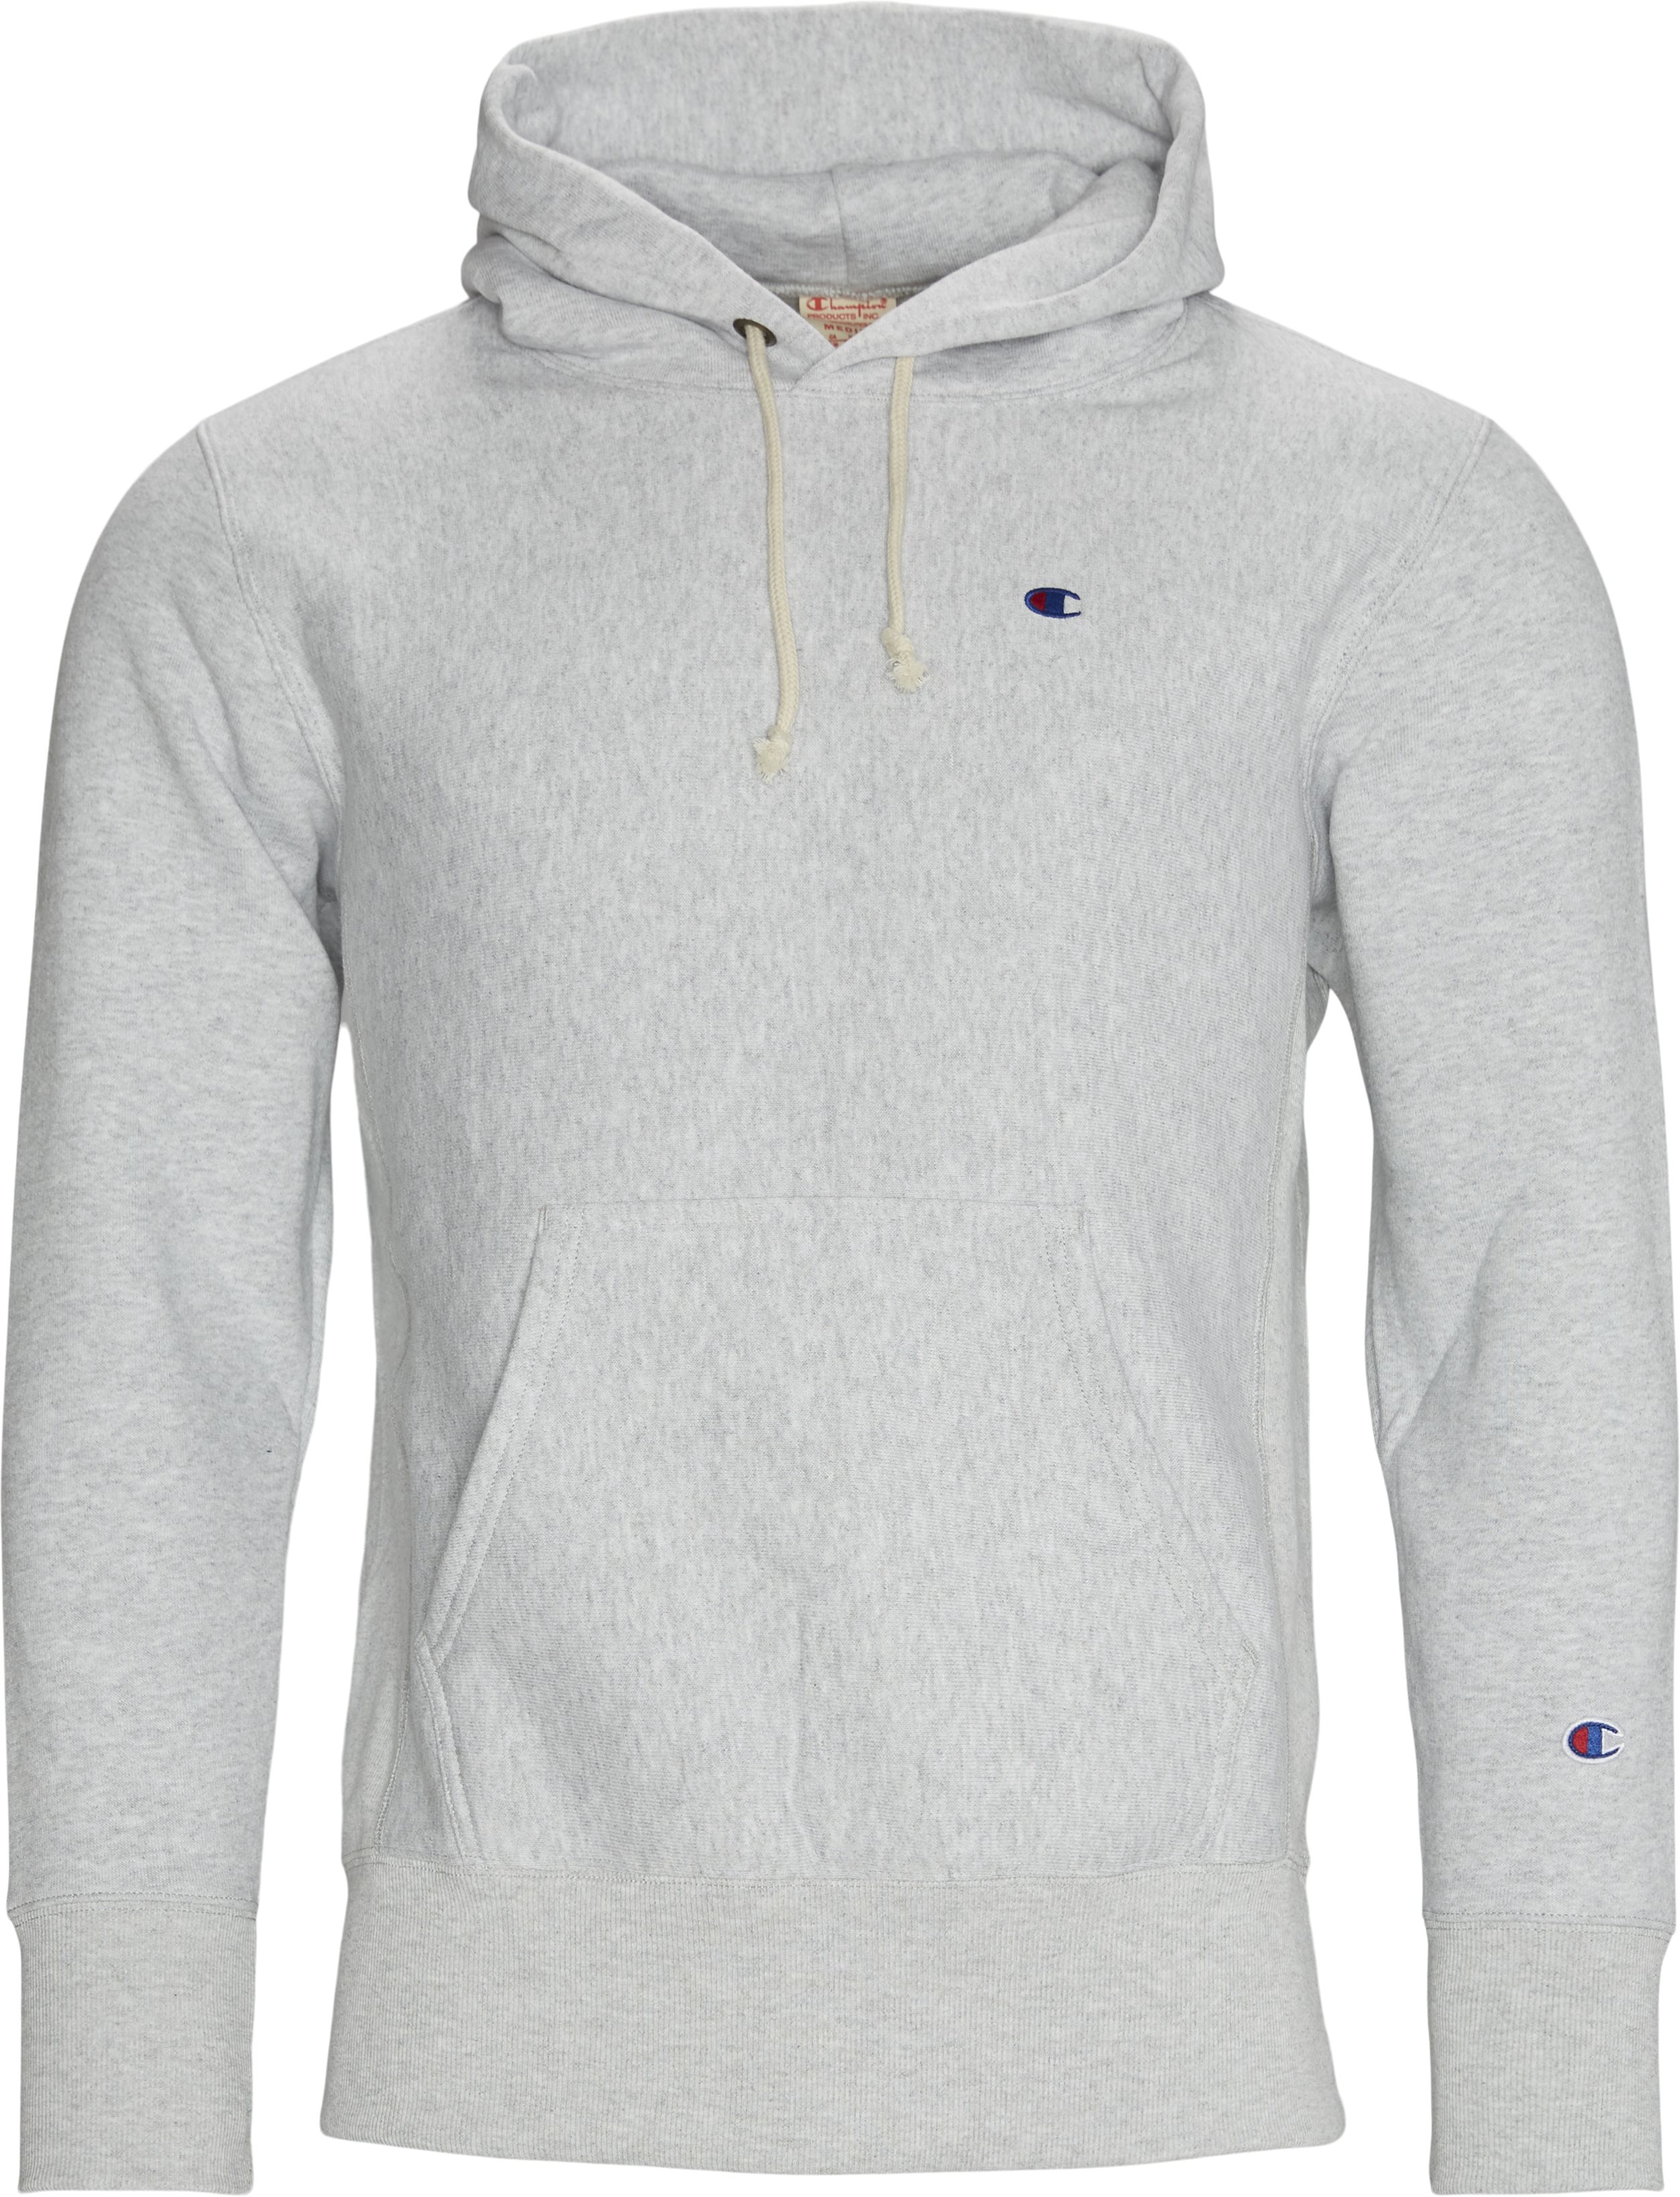 Champion Sweatshirt - Regular fit - Grey